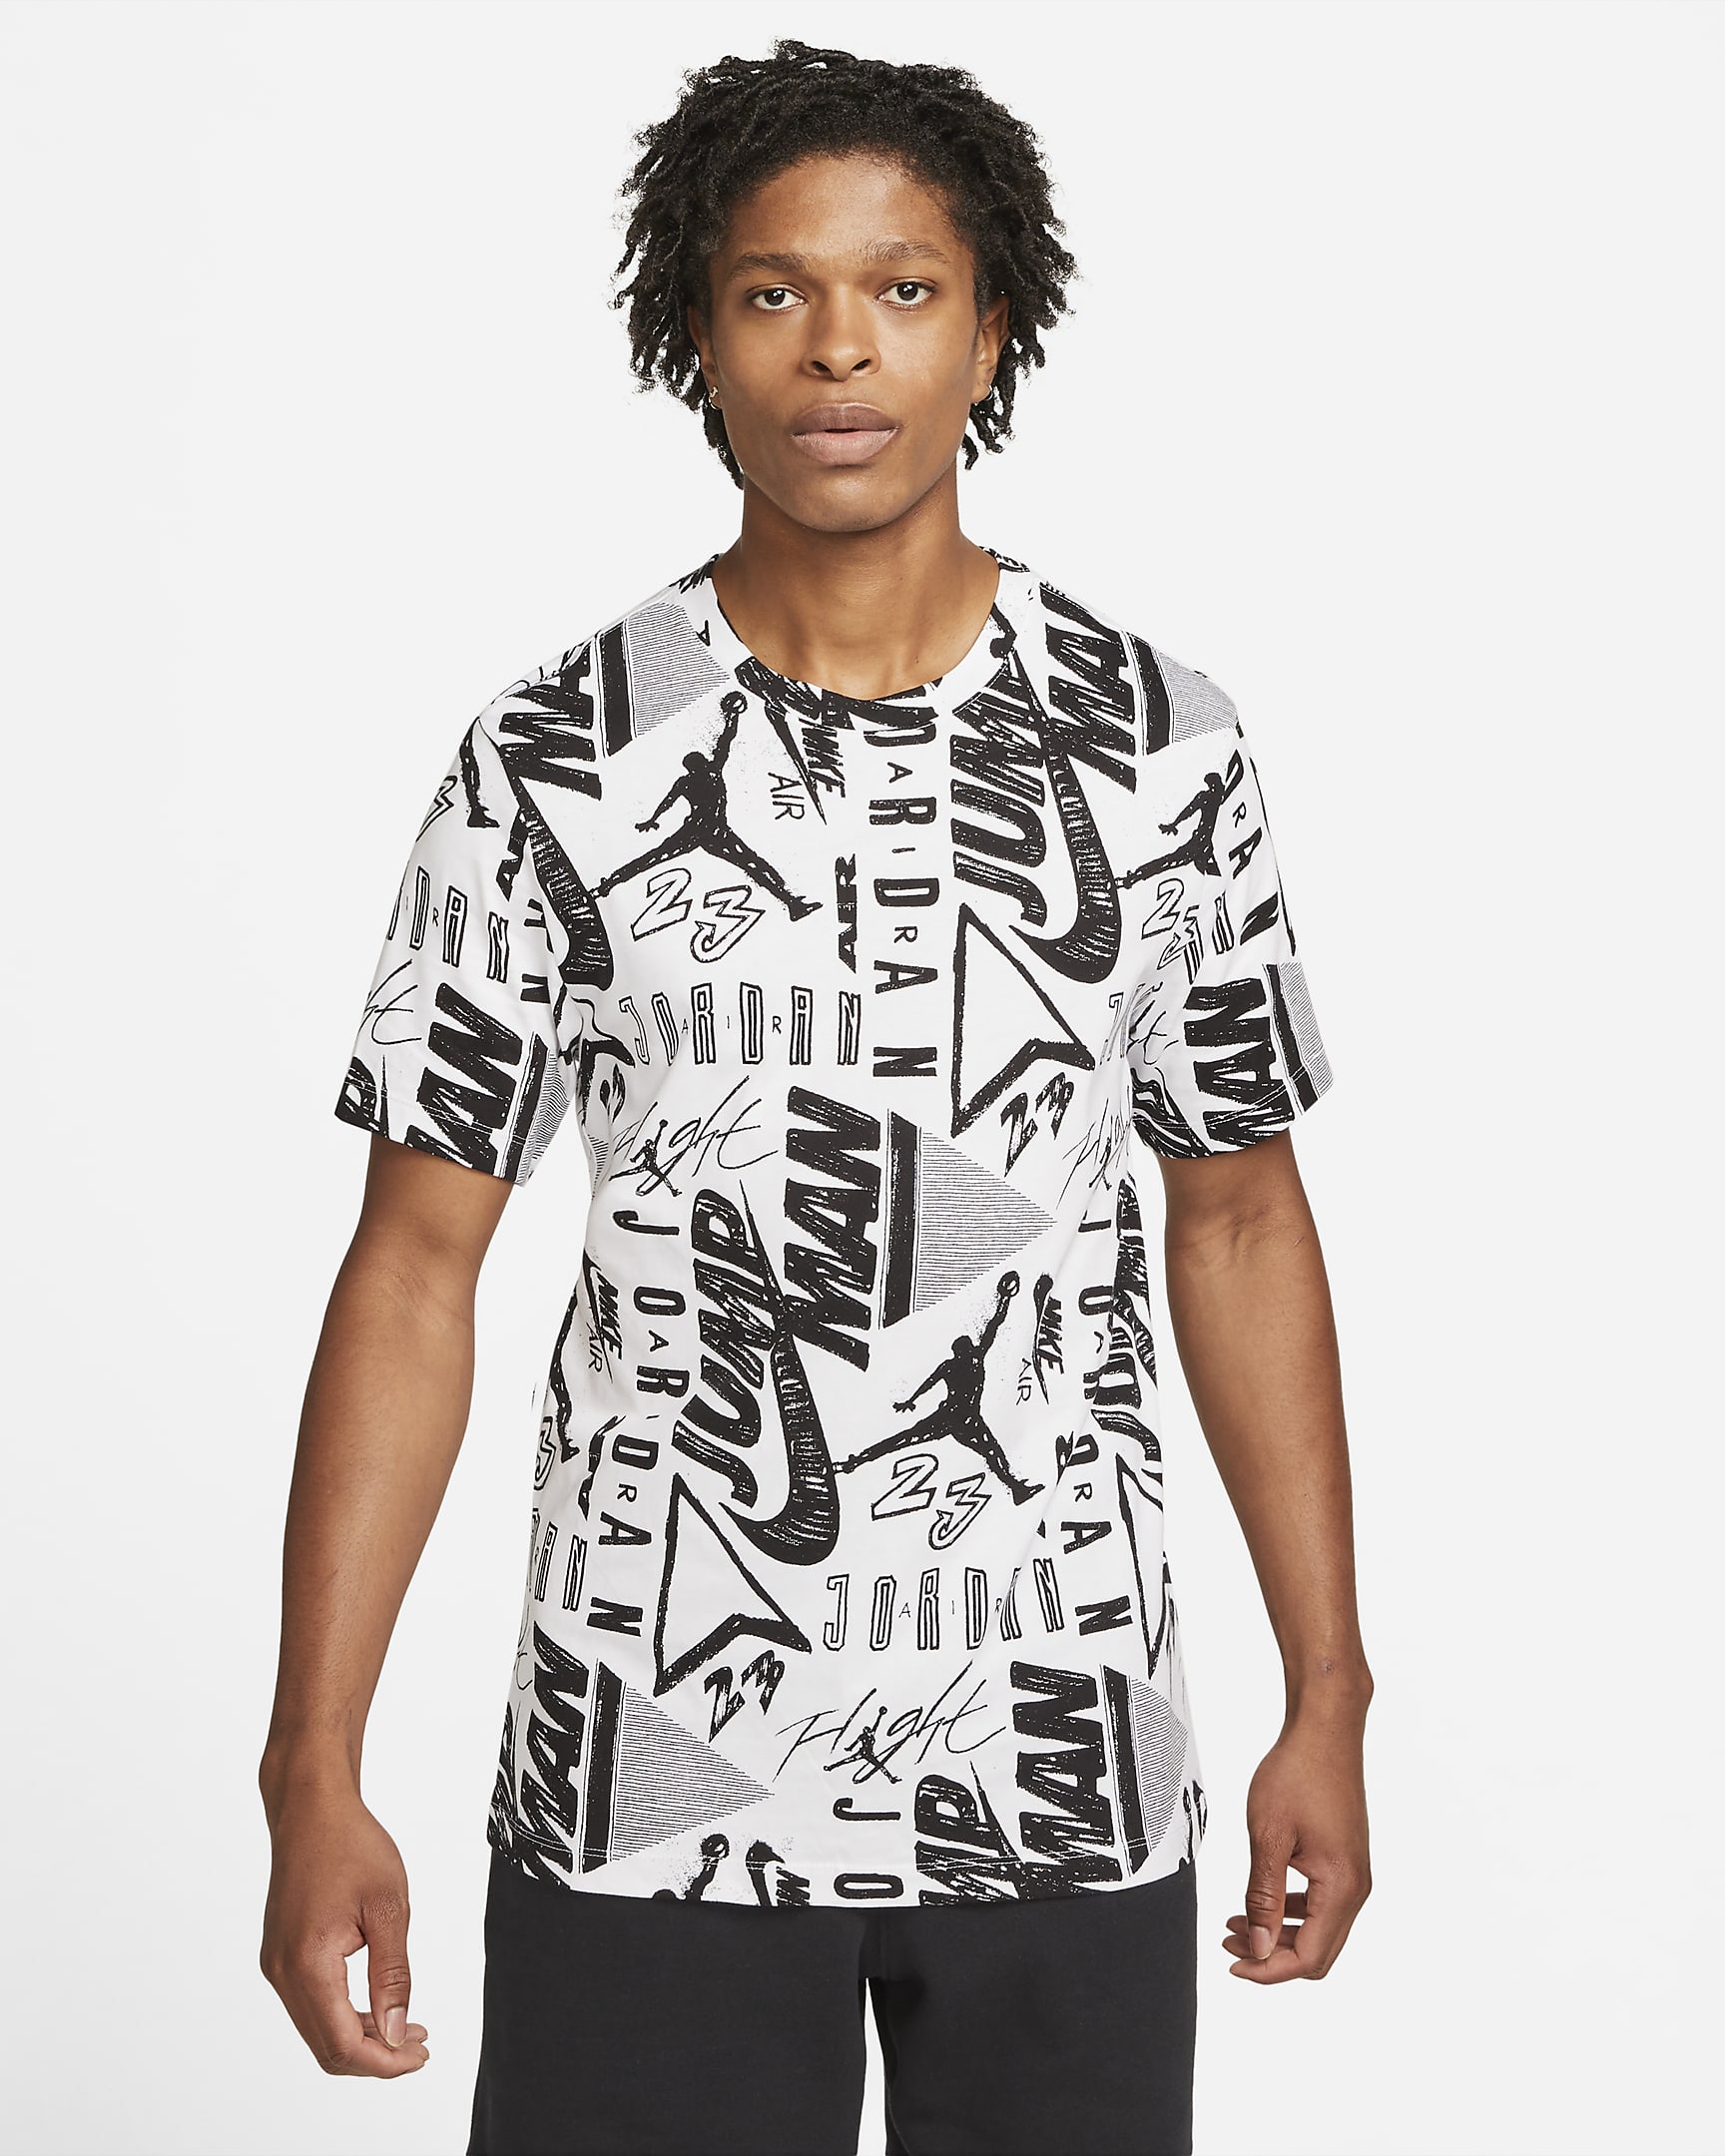 jordan-brand-mens-short-sleeve-allover-printed-t-shirt-GXW15v.png